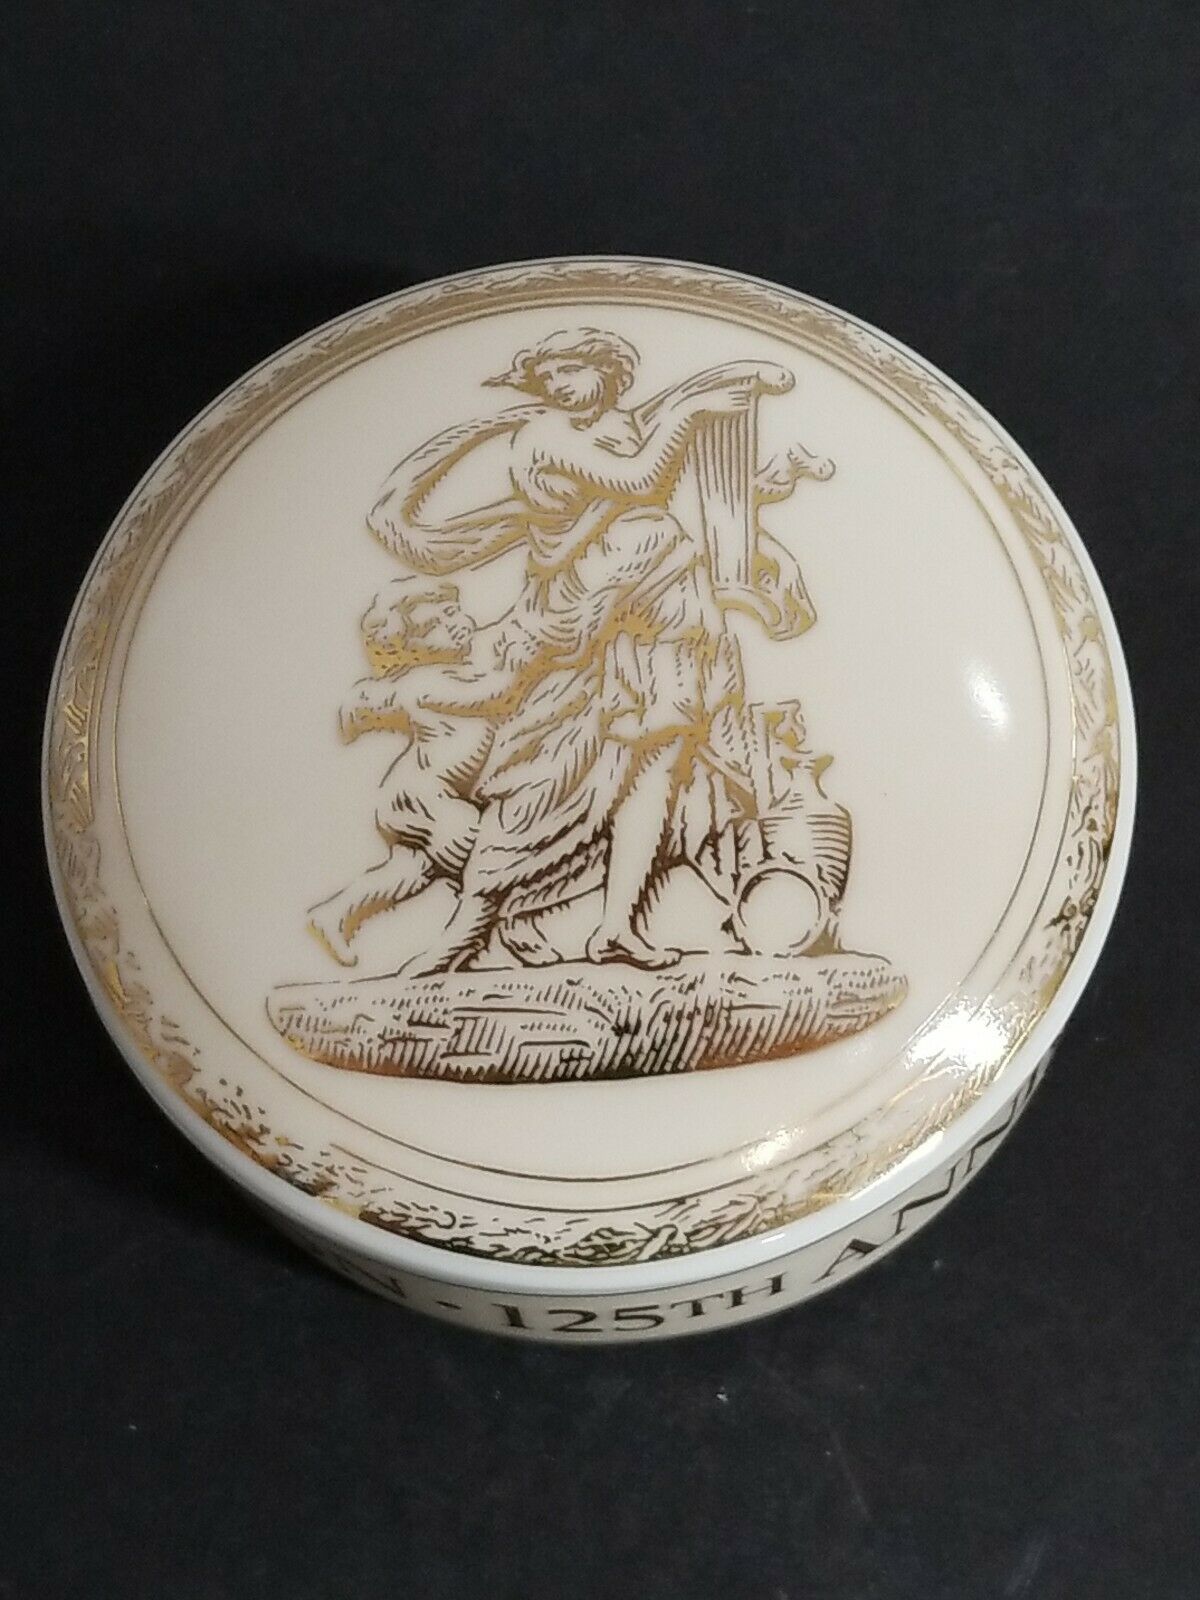 Boston Museum of Fine Arts, 125th Anniversary, Tiffany & Company Porcelain Dish